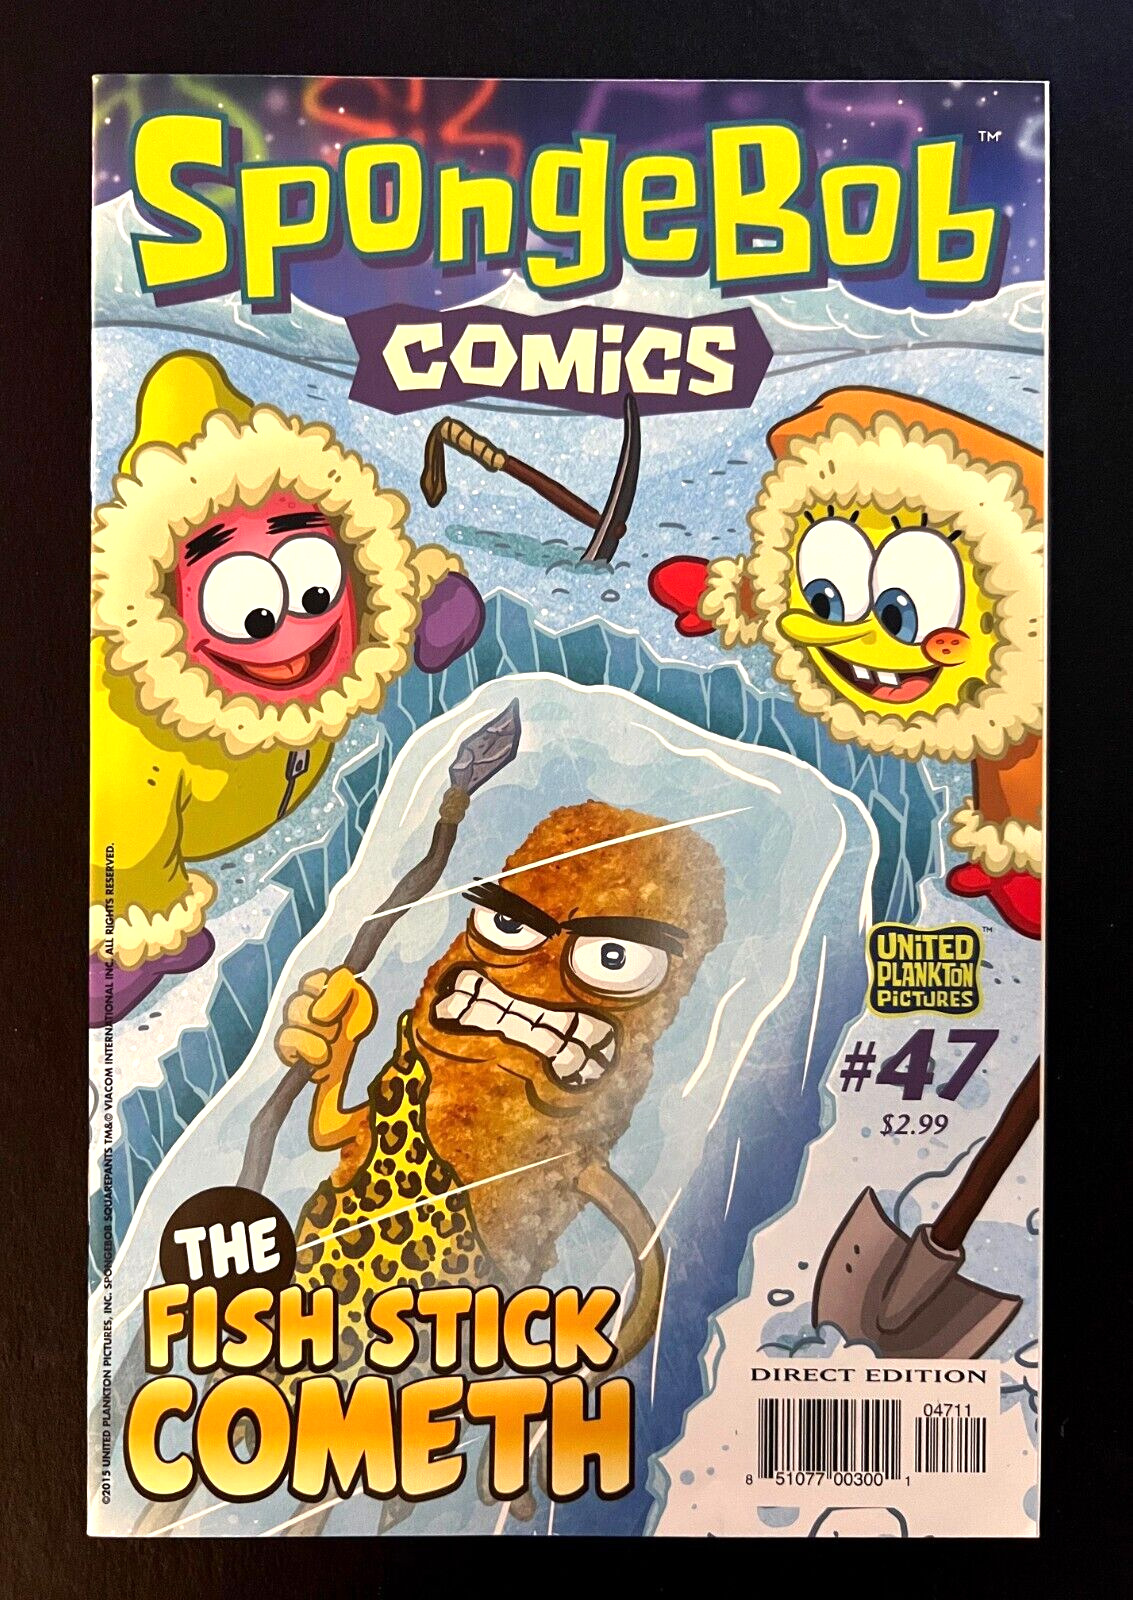 SPONGEBOB COMICS #47 Hi-Grade Larry The Lobster United Plankton Pictures 2015